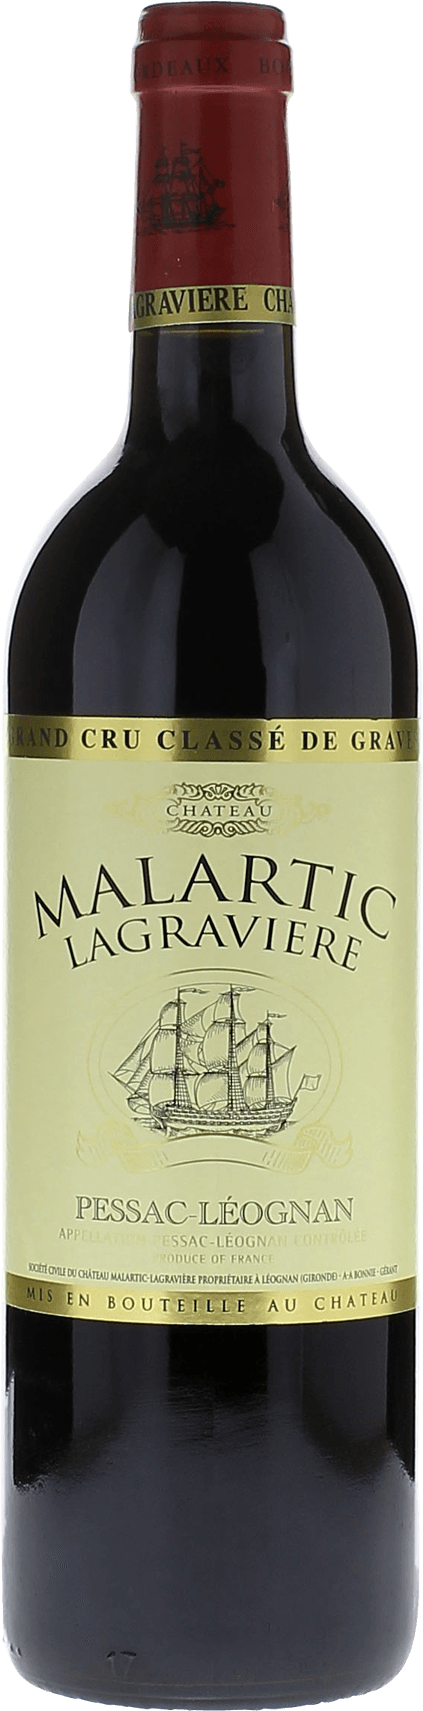 Malartic lagraviere rouge 2014 Grand Cru Class Graves, Bordeaux rouge